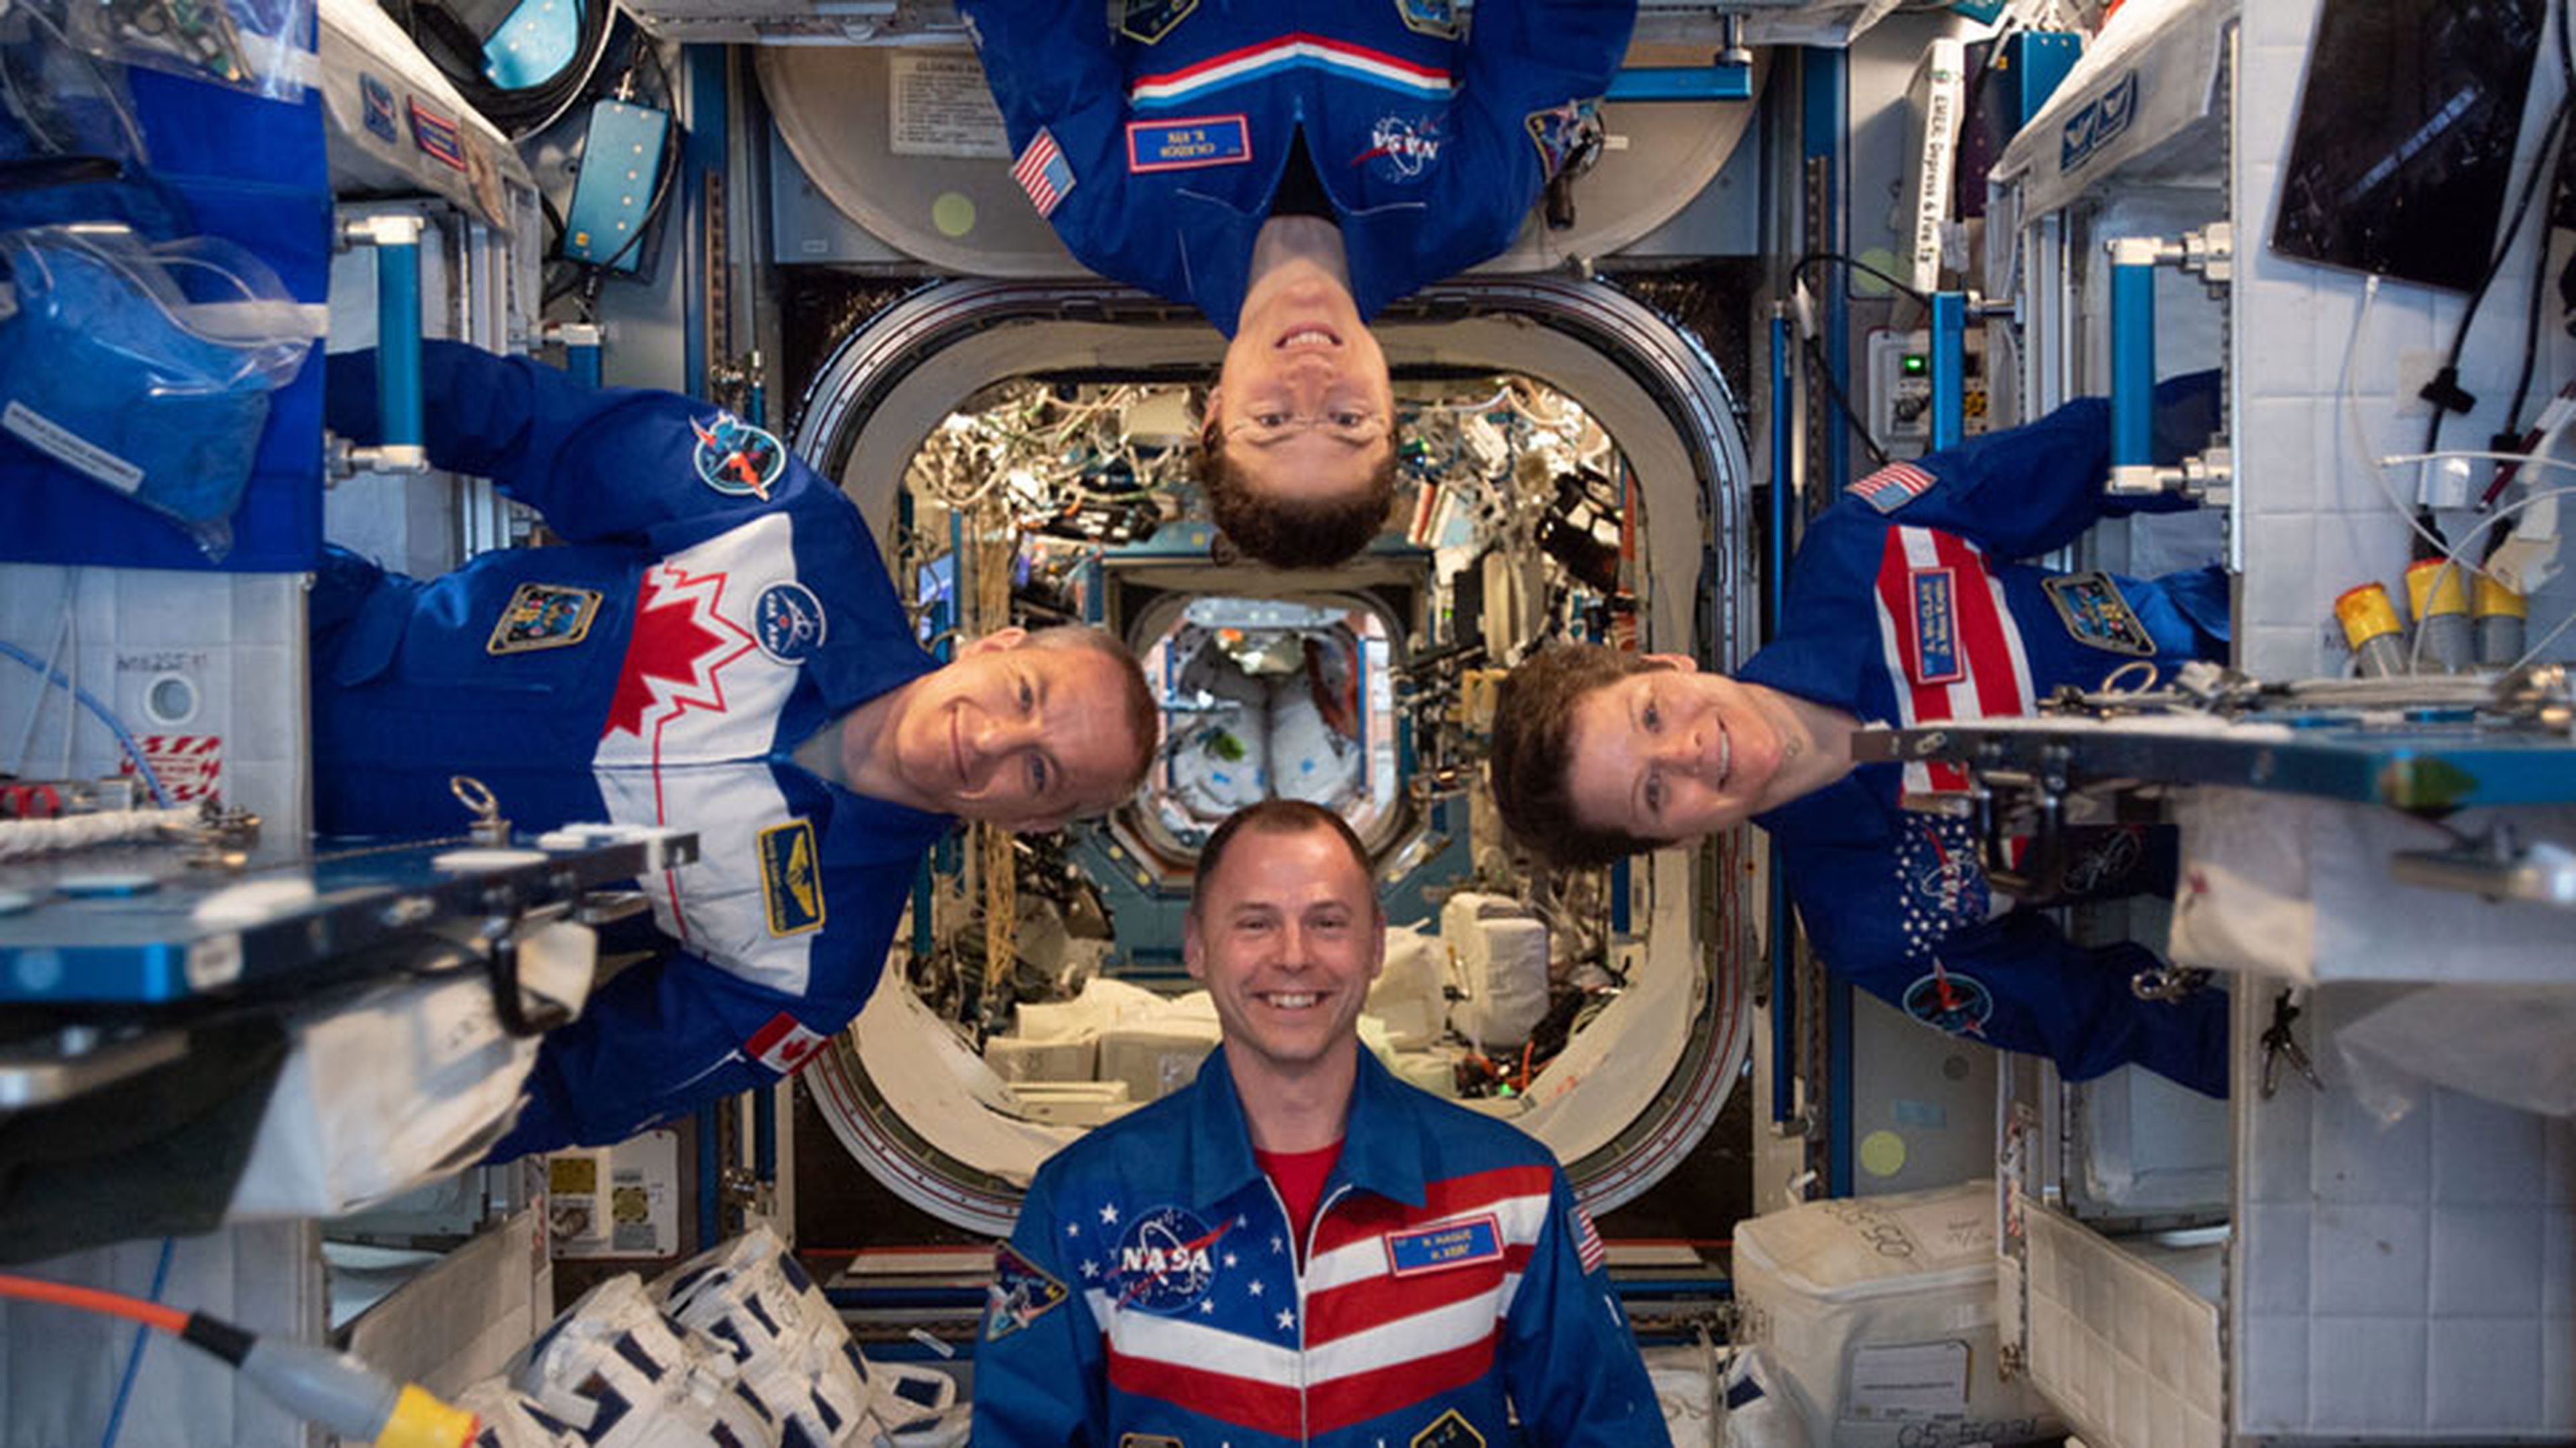 Astronautas en la ISS